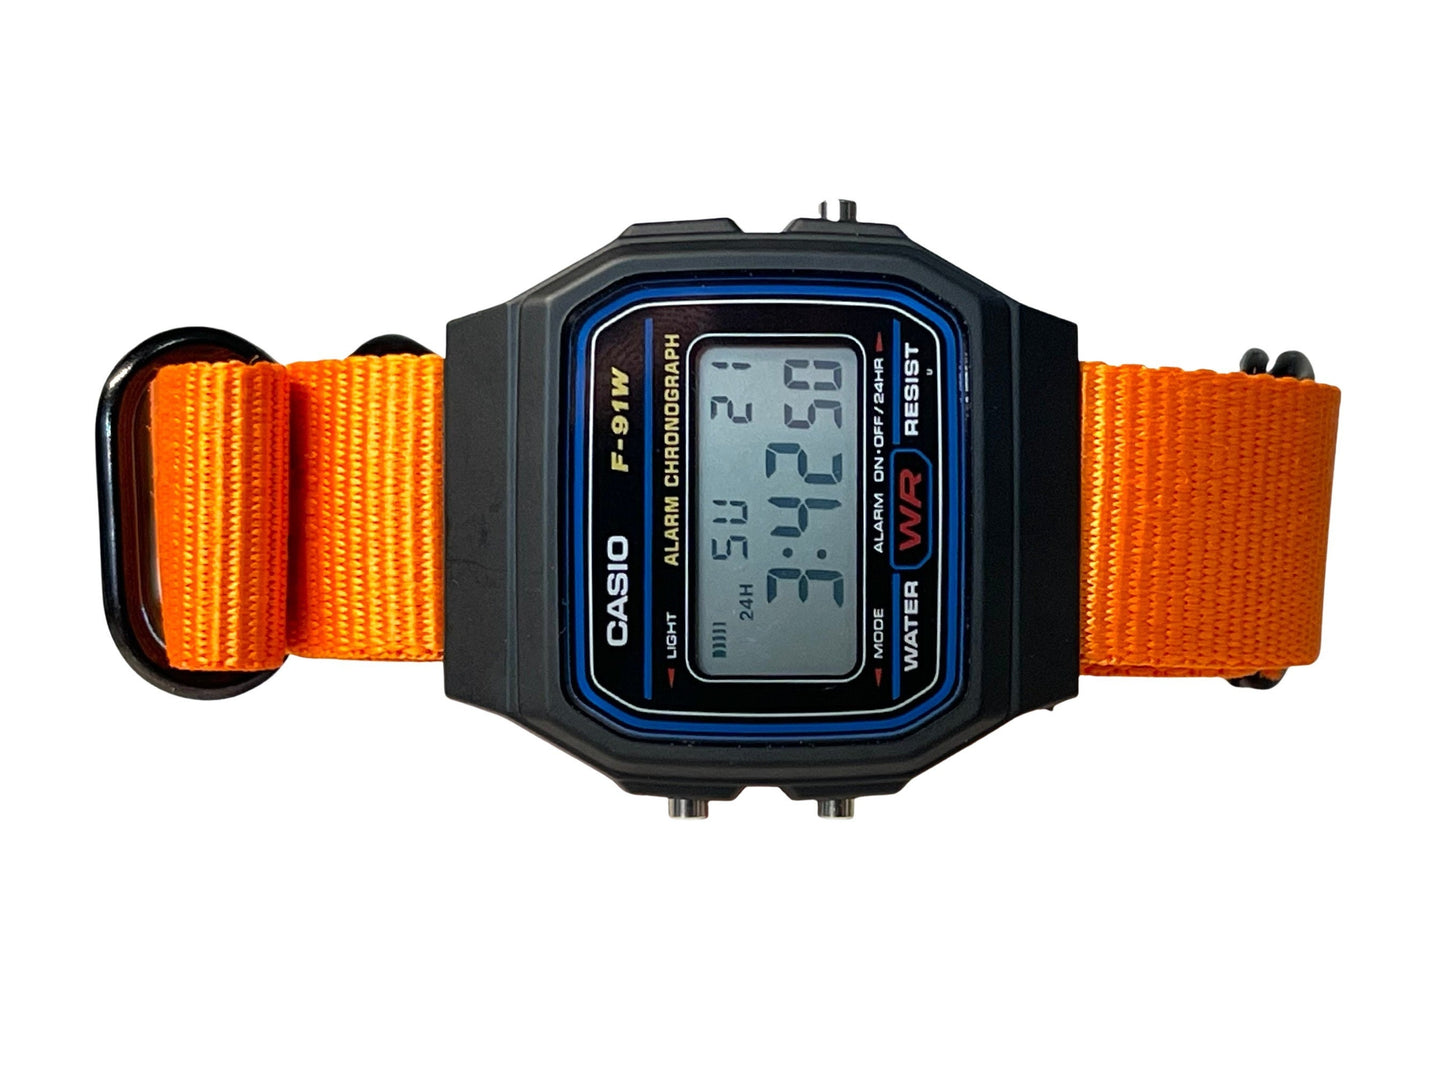 Custom Black Casio Watch on Orange Strap w/ black hardware